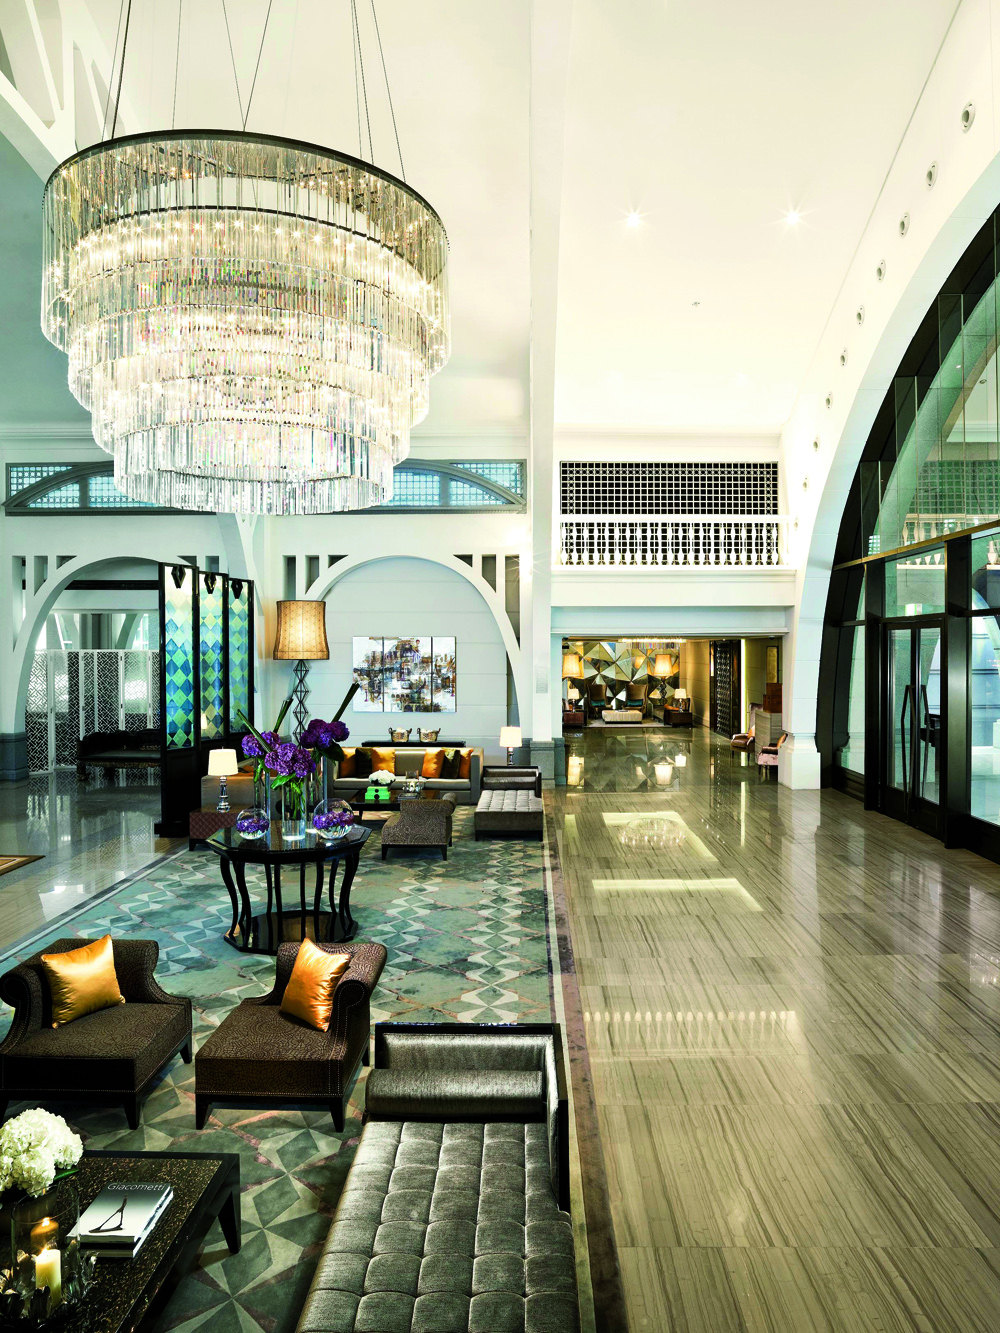 新加坡富尔顿海湾酒店( The Fullerton Bay Hot )(AFSO+LCL)第四页有..._新加波The Fullerton Bay Hotel Singapore入口Hi_SINFB_30921640_Entrance.jpg